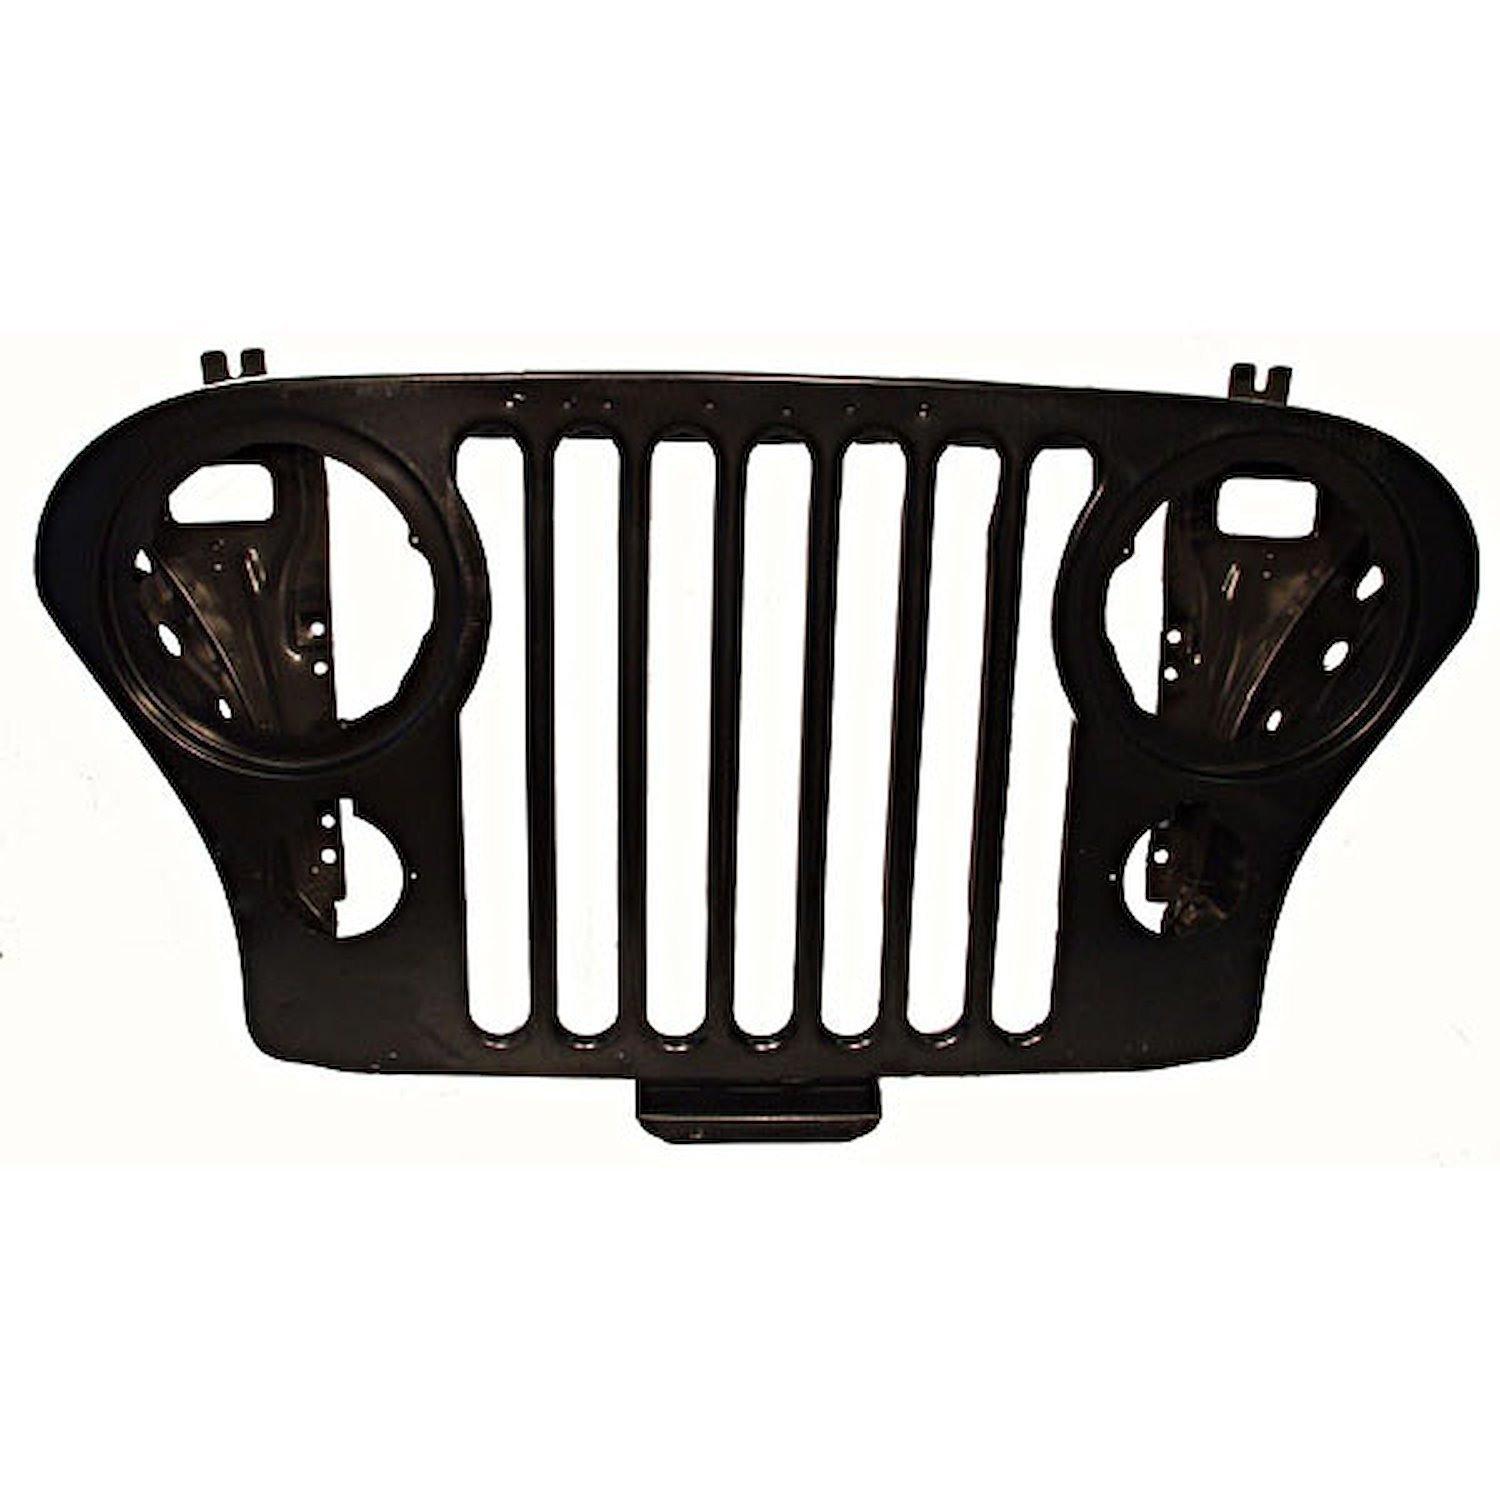 This licensed Mopar grille from Omix-ADA fits 72-86 Jeep CJ5 CJ7 and CJ8 Scrambler.